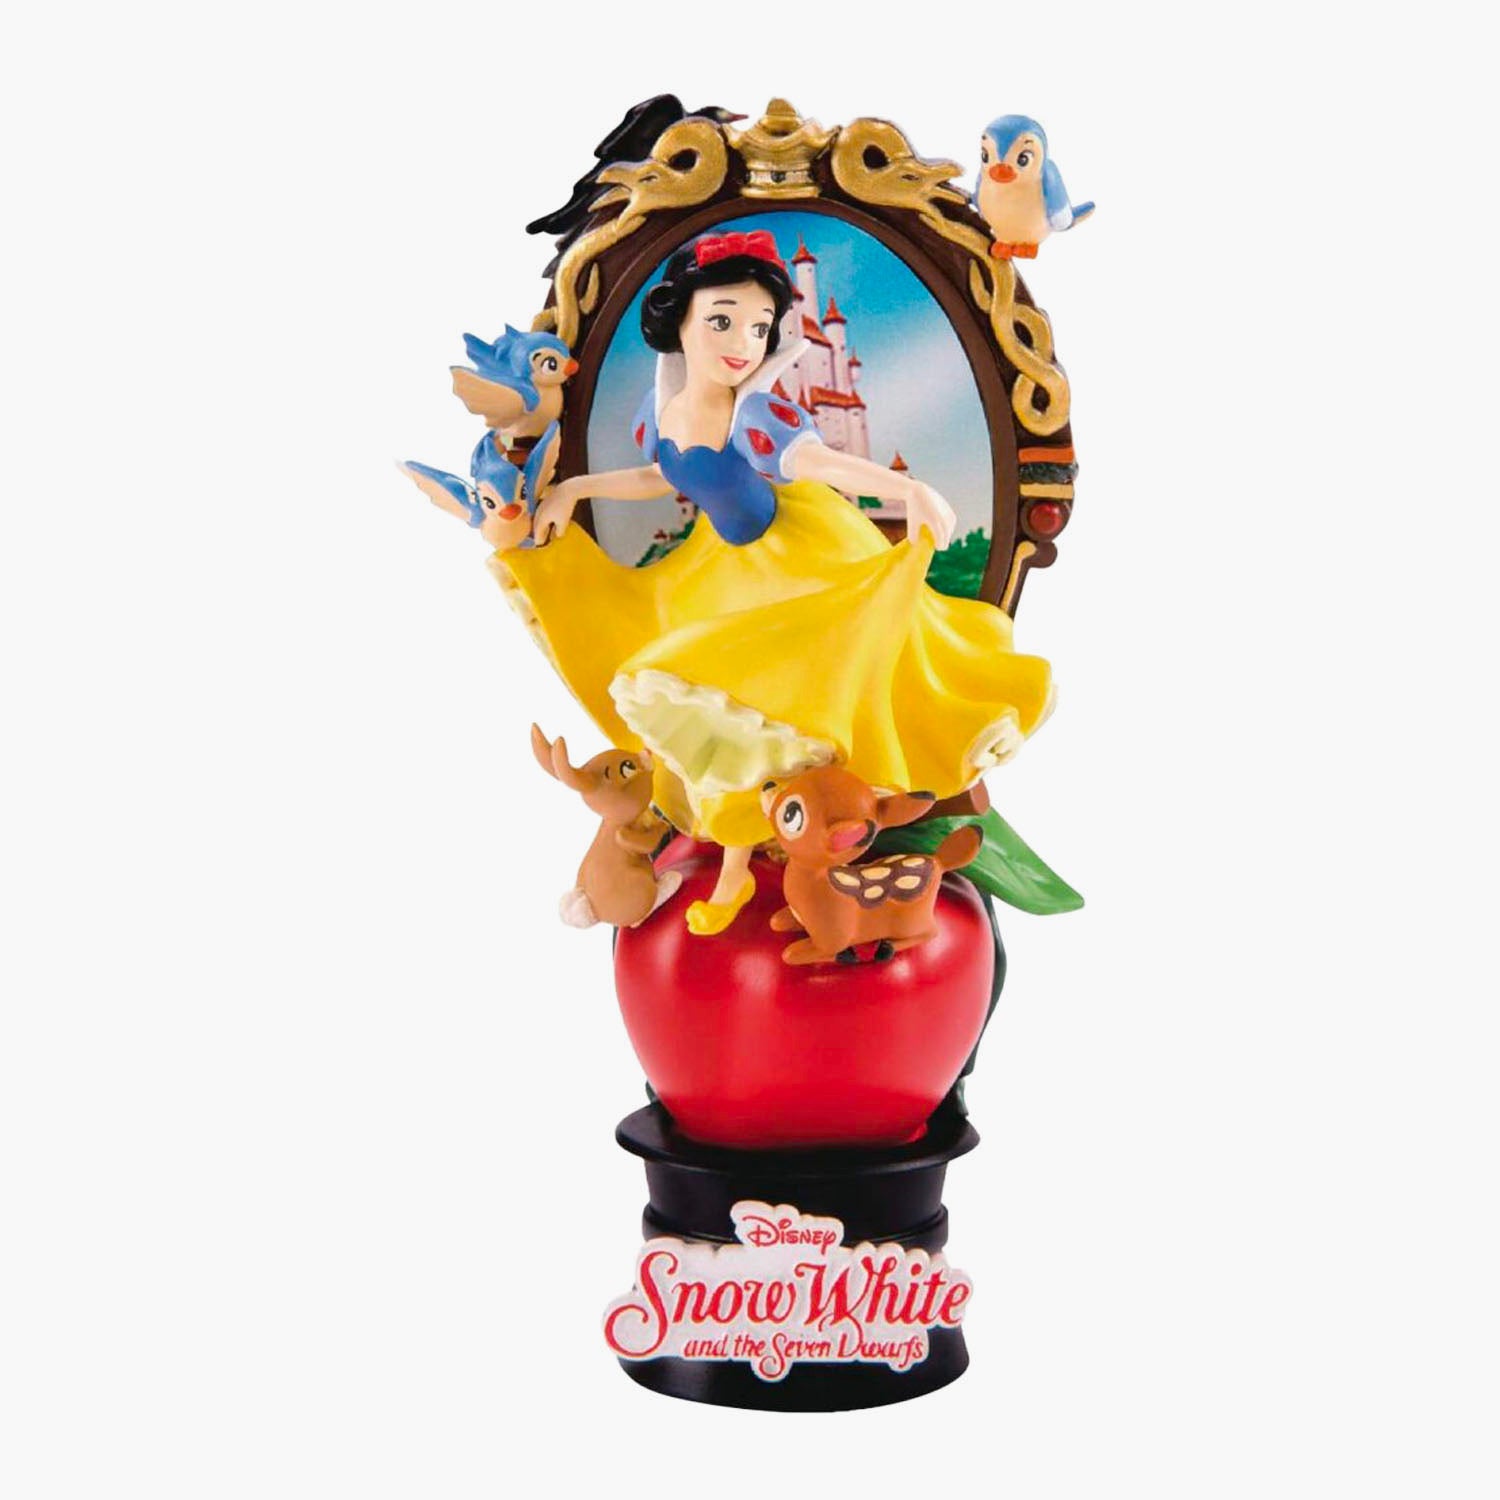 Snow White and the Seven Dwarfs Figurine